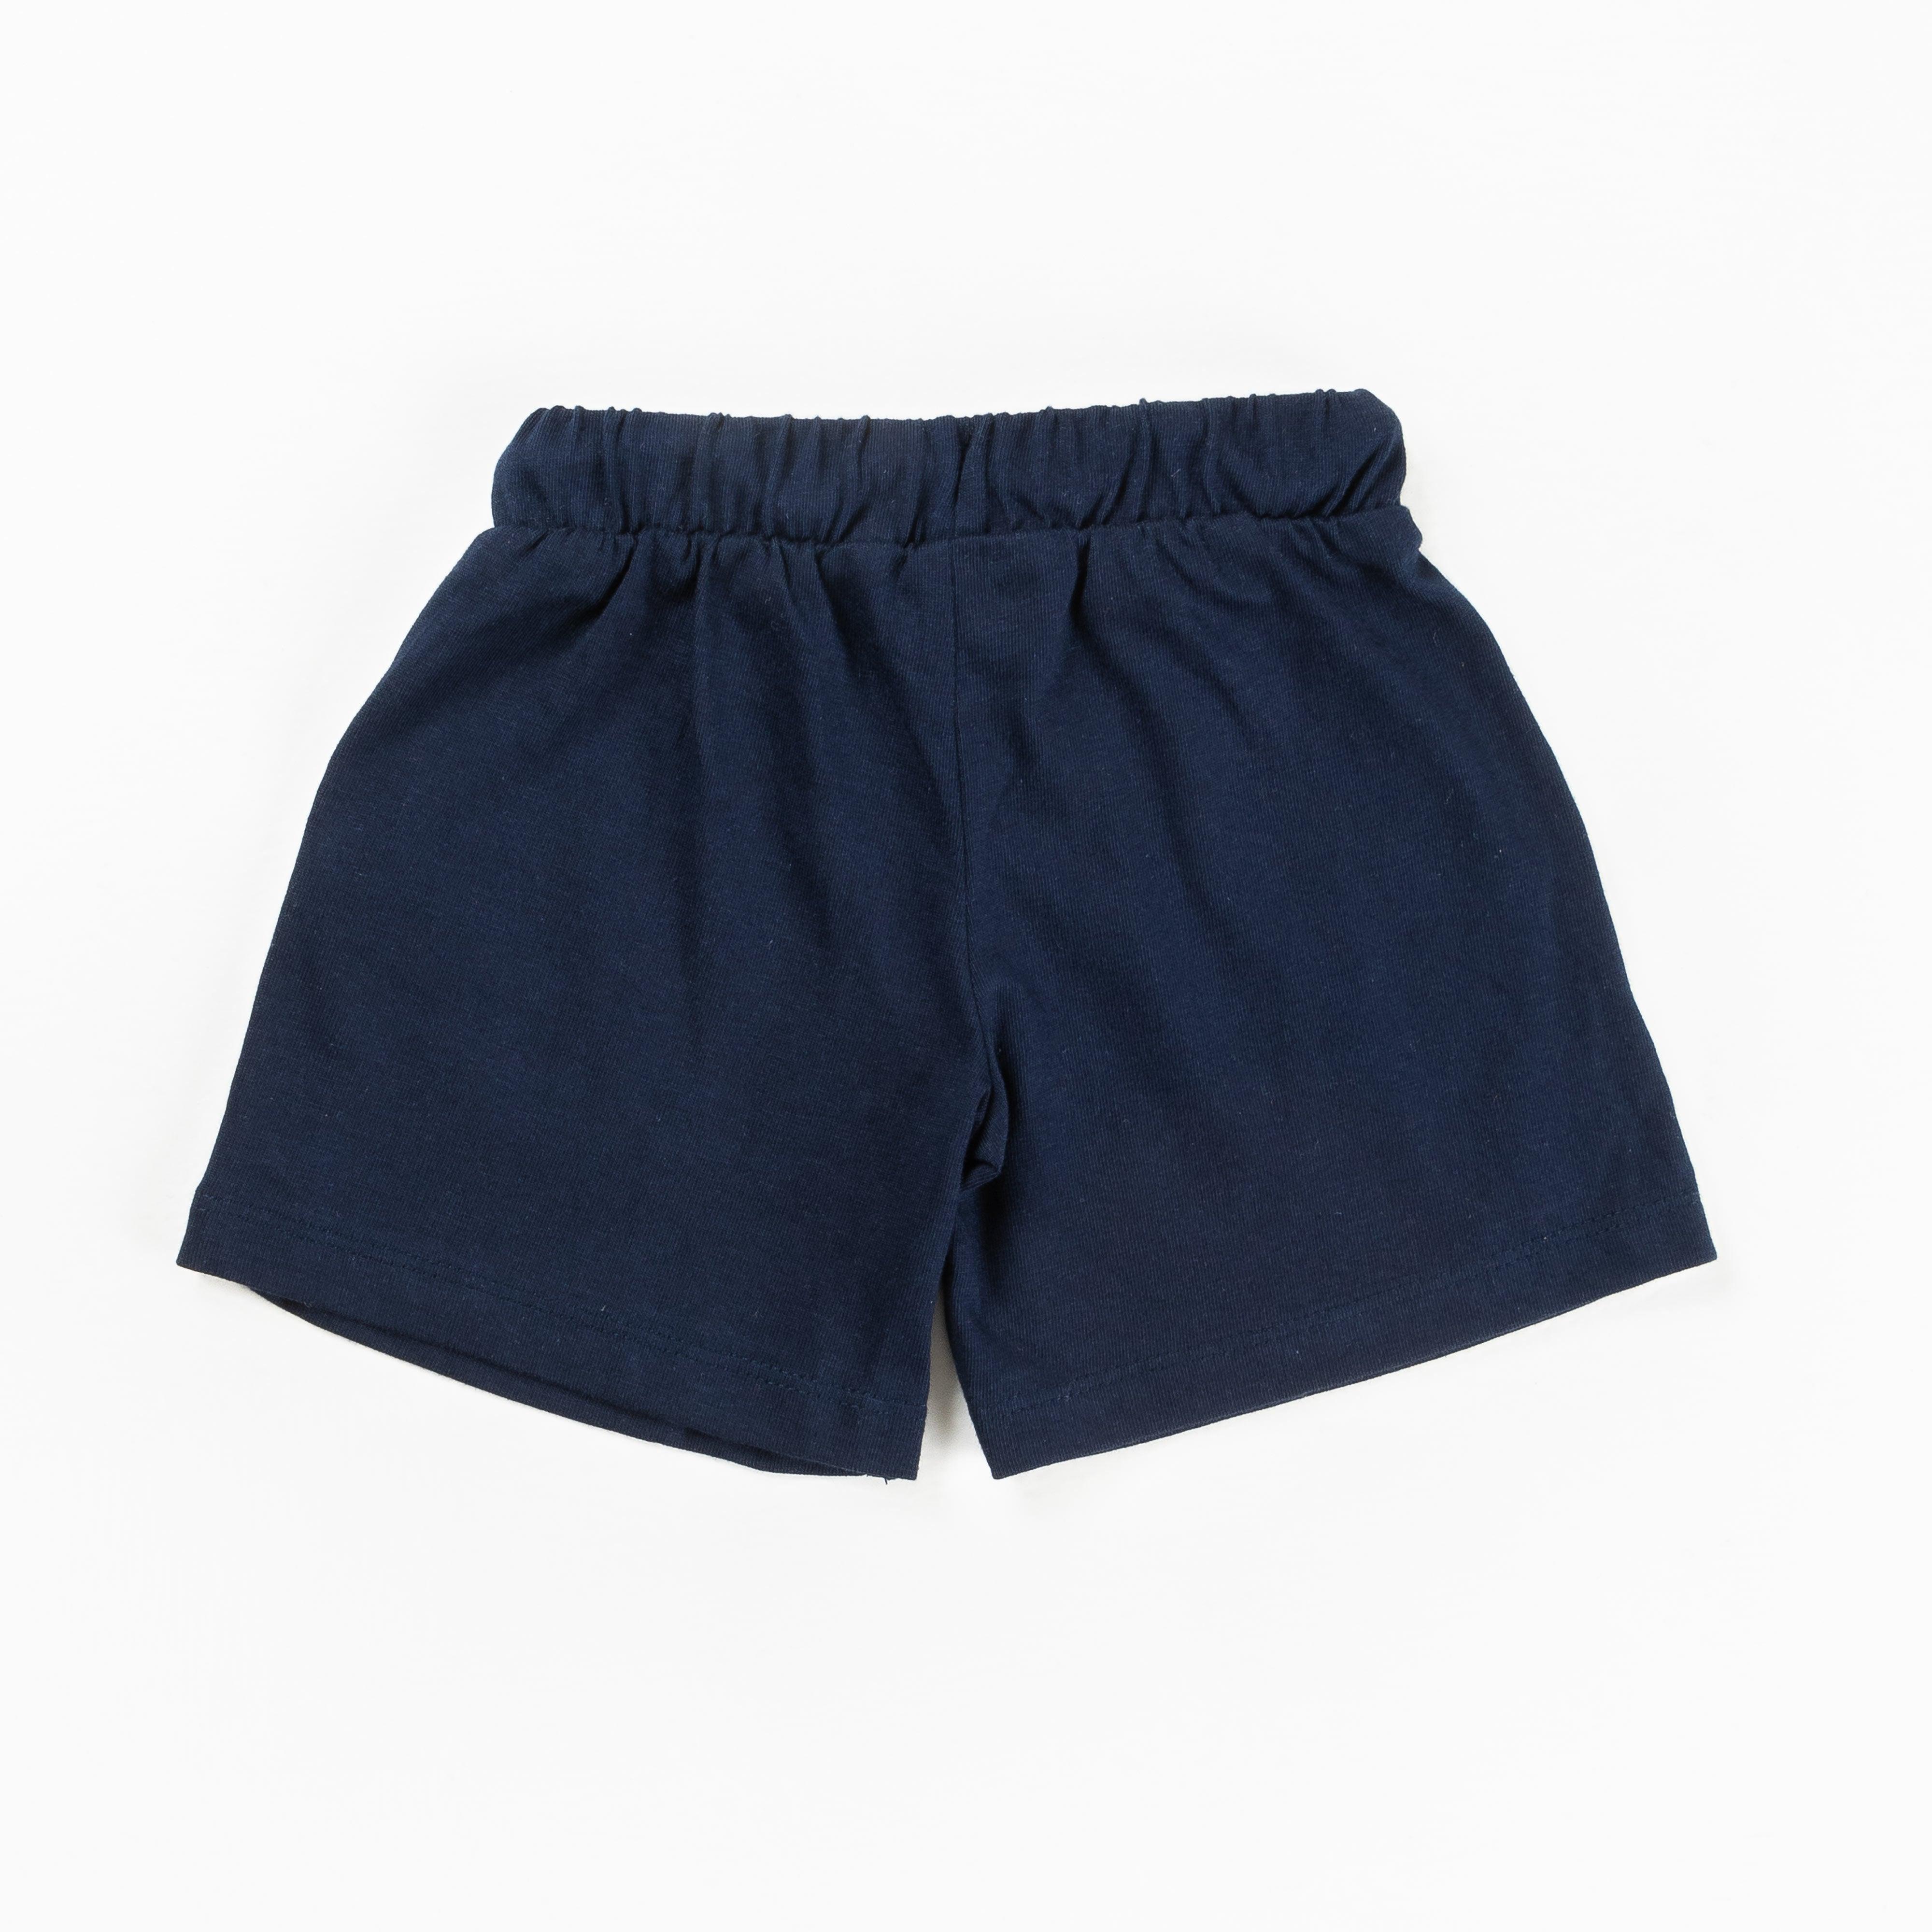 Boys Printed Shorts - Juscubs